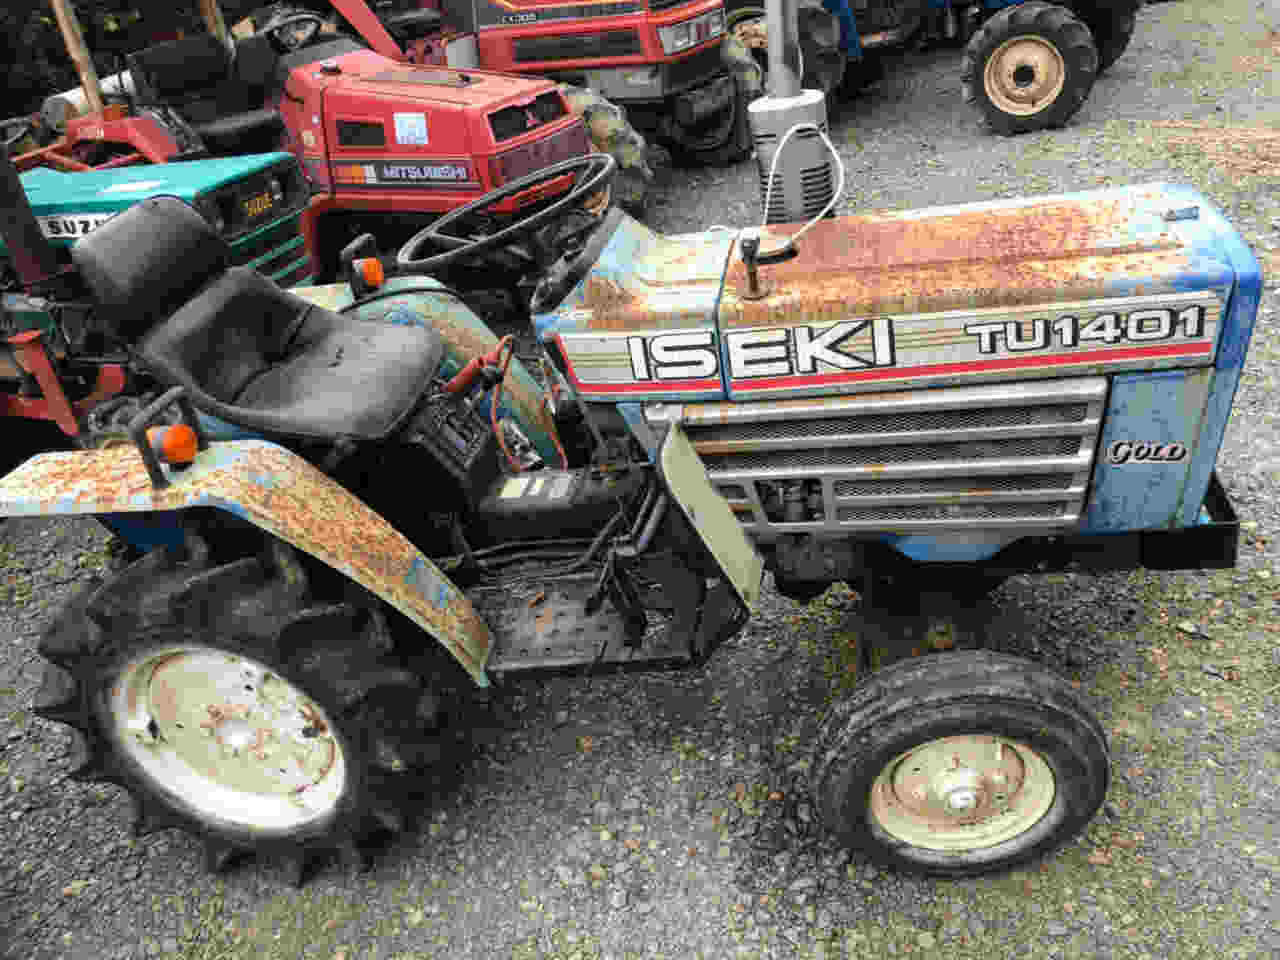 ISEKI TU1401S 00531 used compact tractor |KHS japan